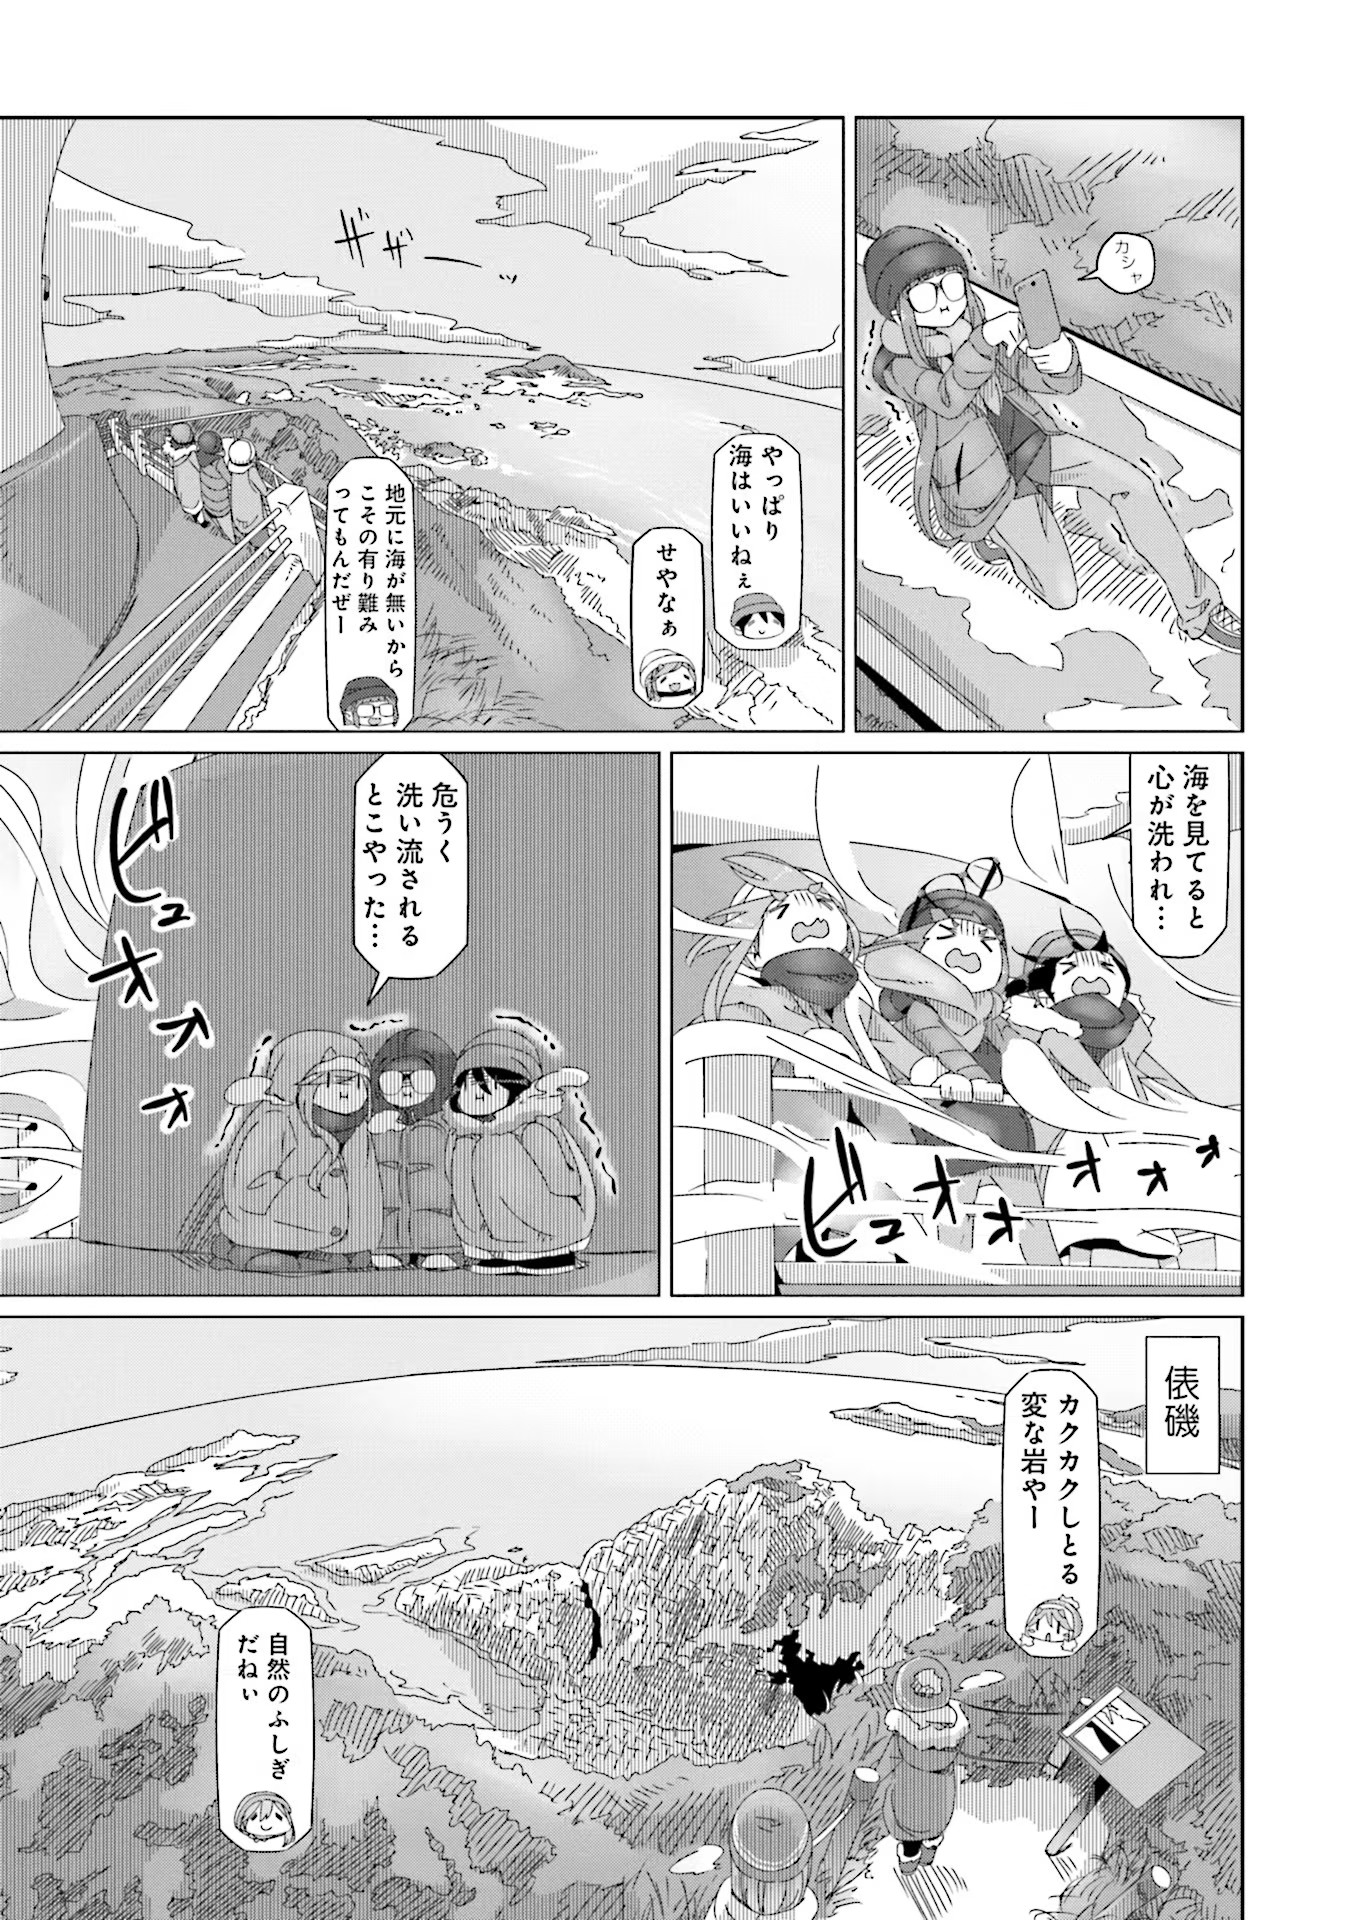 Yuru Camp - Chapter 45 - Page 3